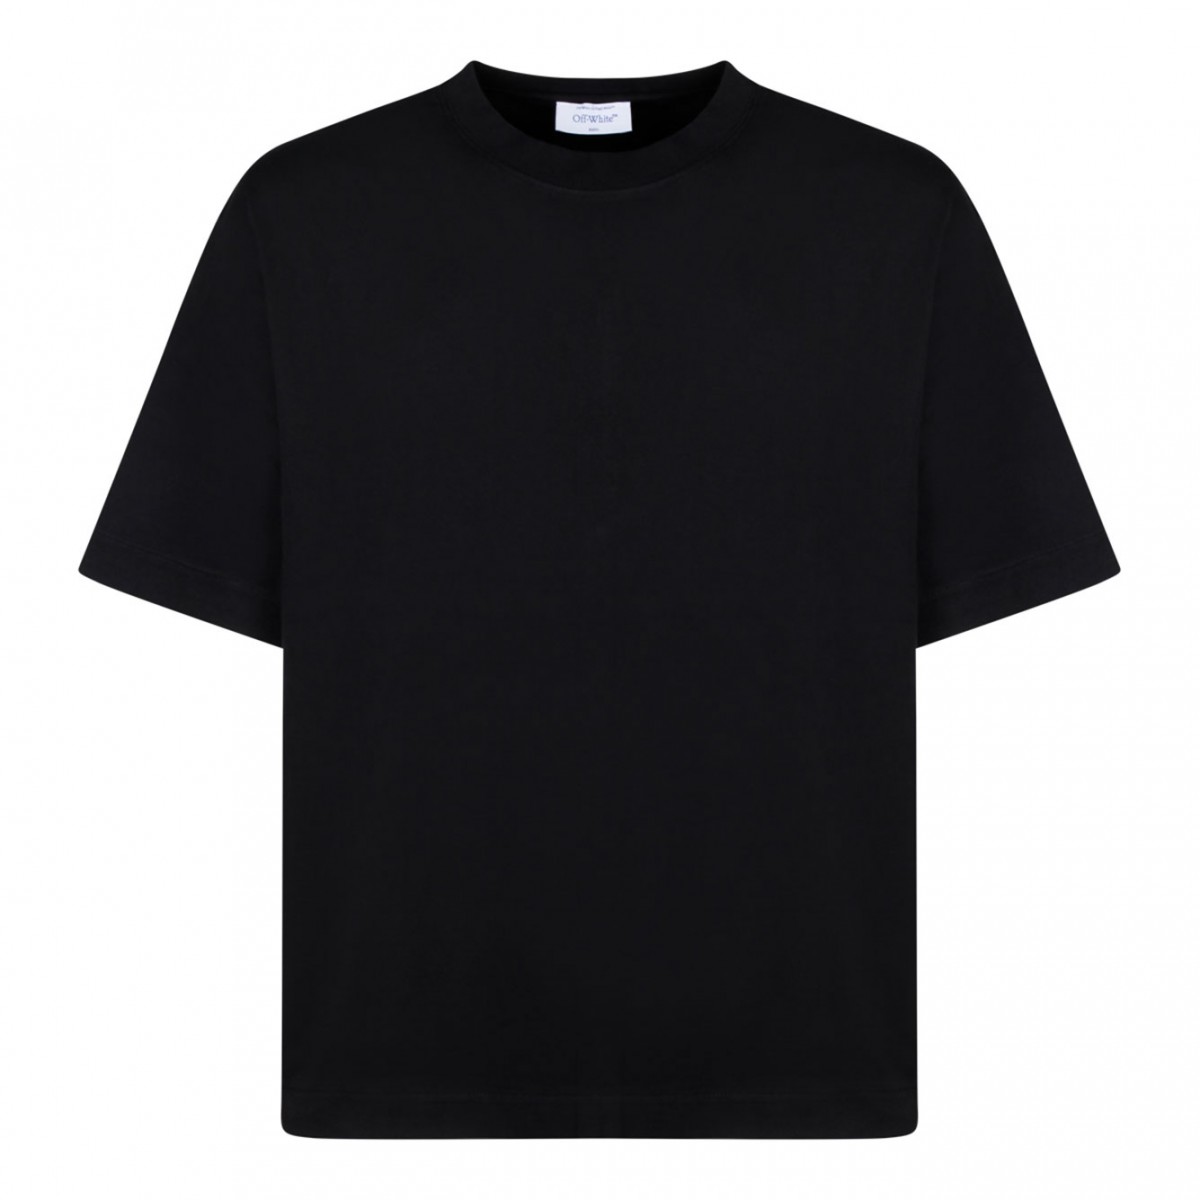 Black Arrows Motif T-Shirt